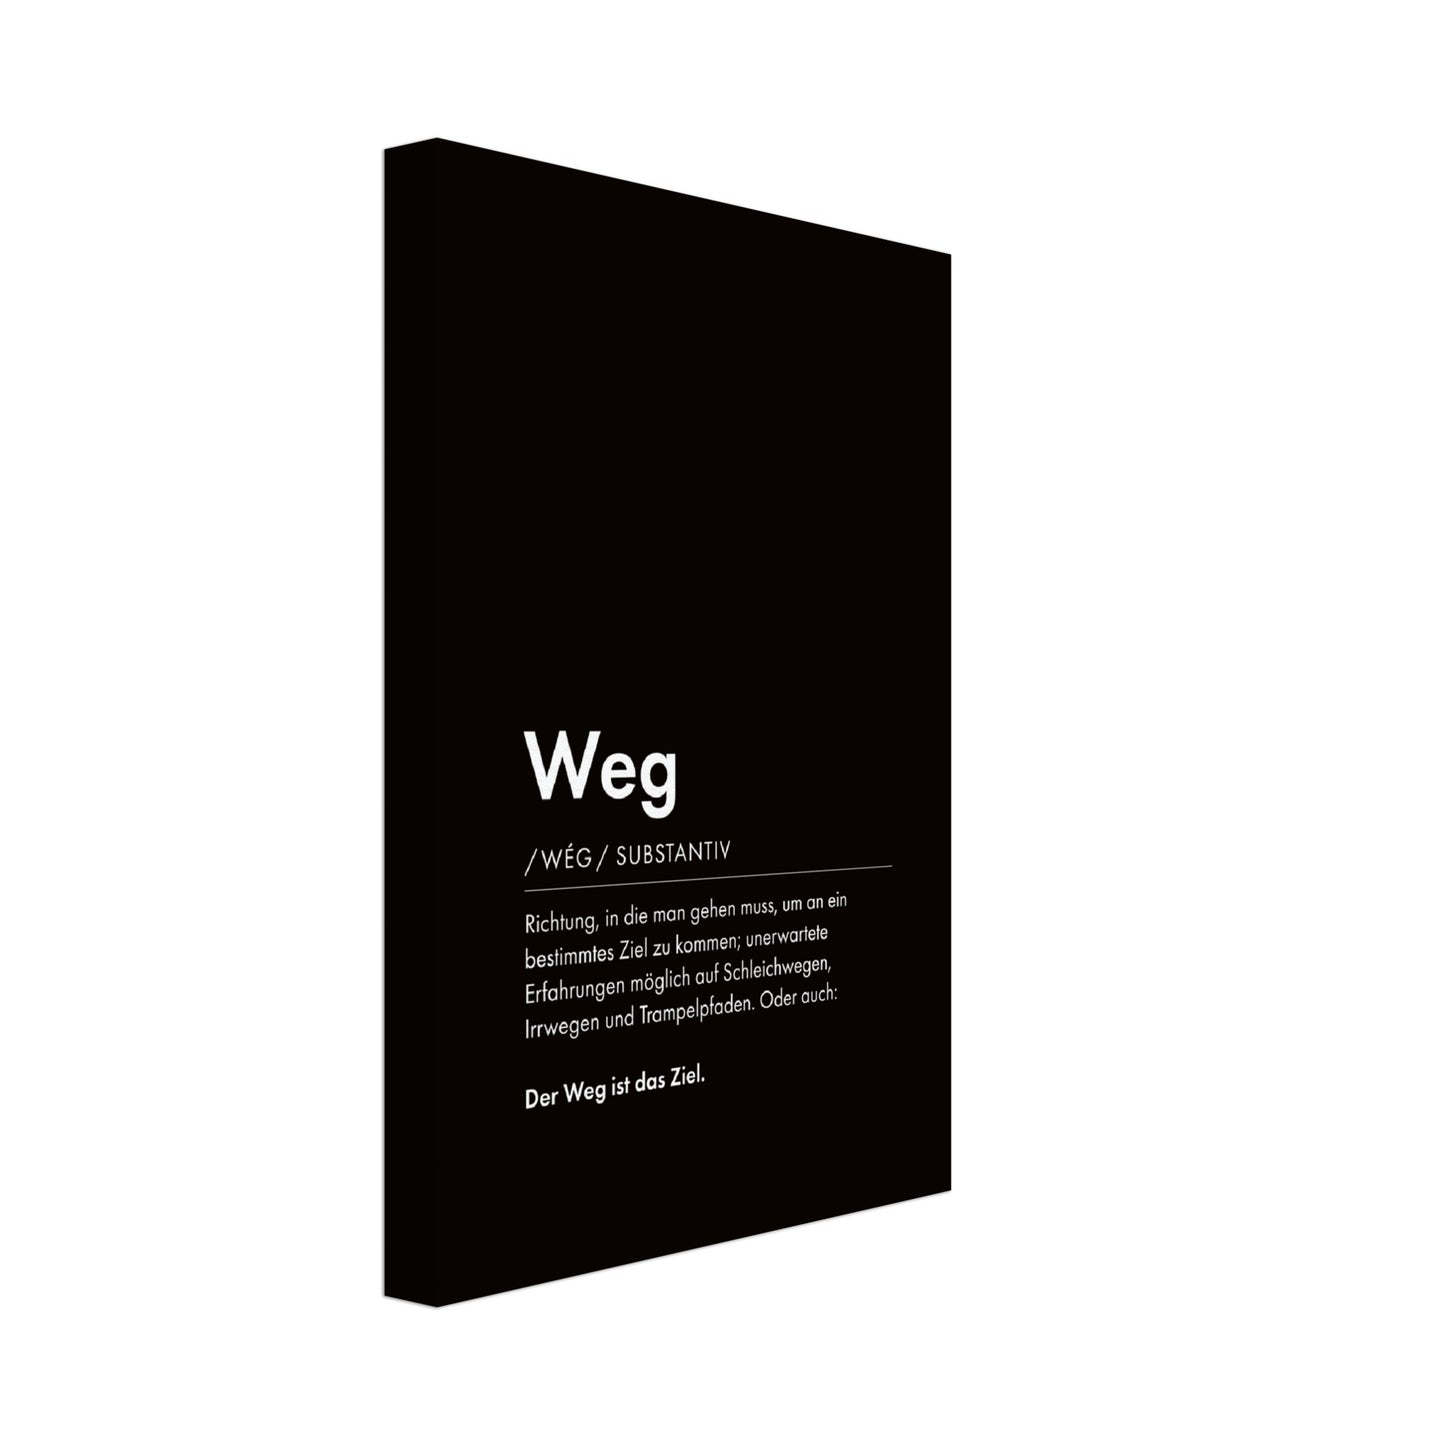 Weg - Wortdefinition-Wandbild - Leinwand Schwarzgrau Neutral im Hochformat - Typografie Worte Sprache Business Job